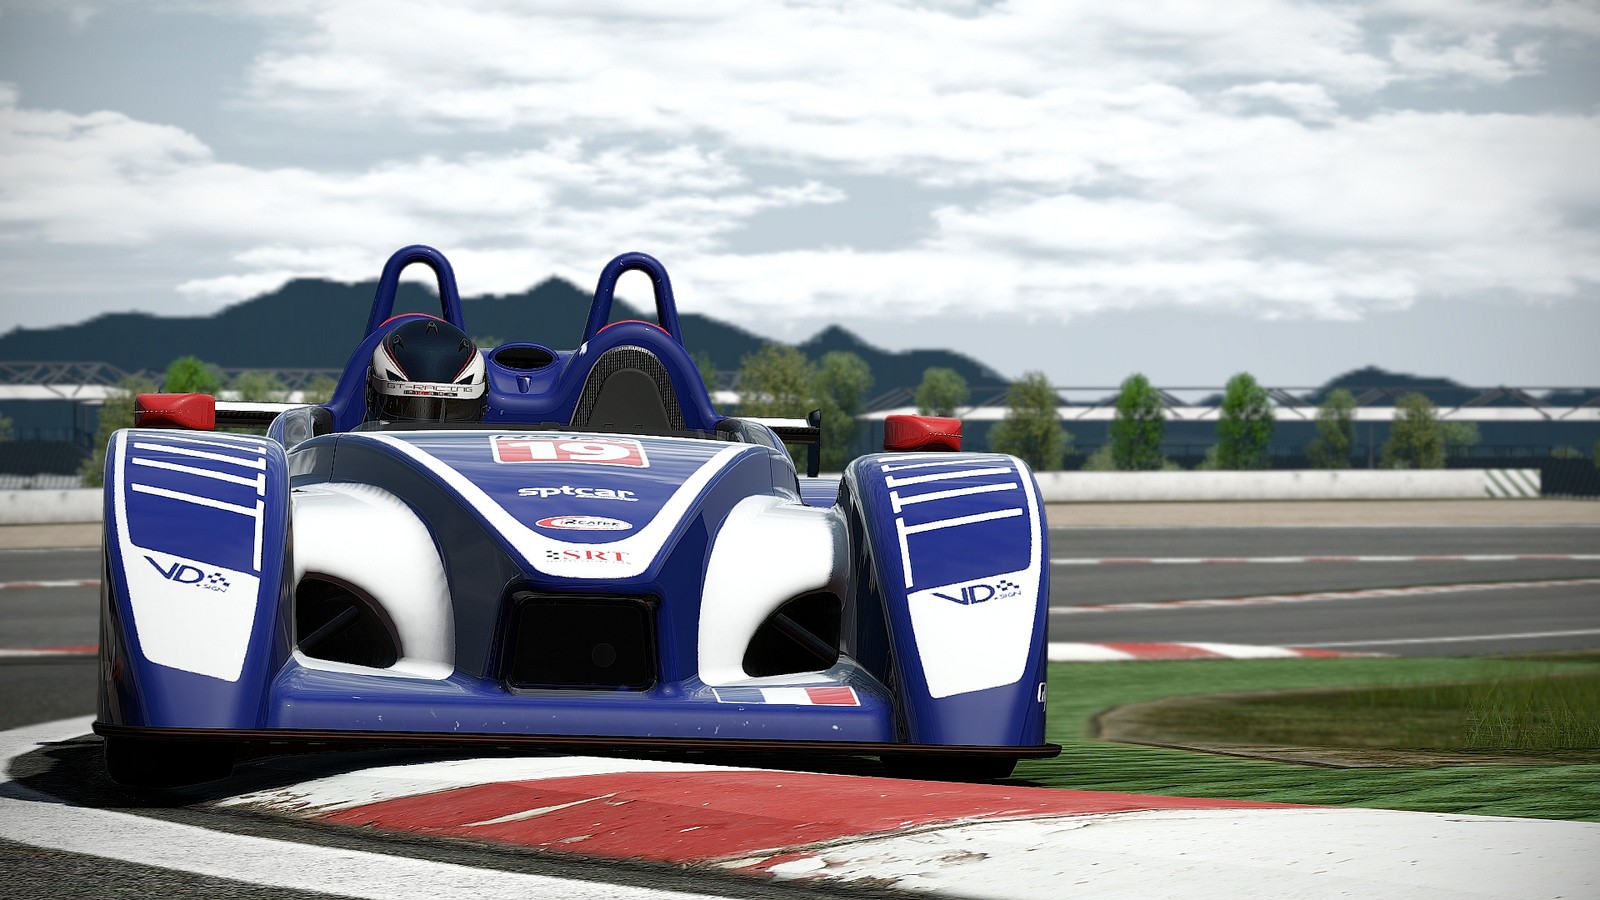 General 1600x900 car race cars racing blue cars vehicle sport motorsport livery race tracks